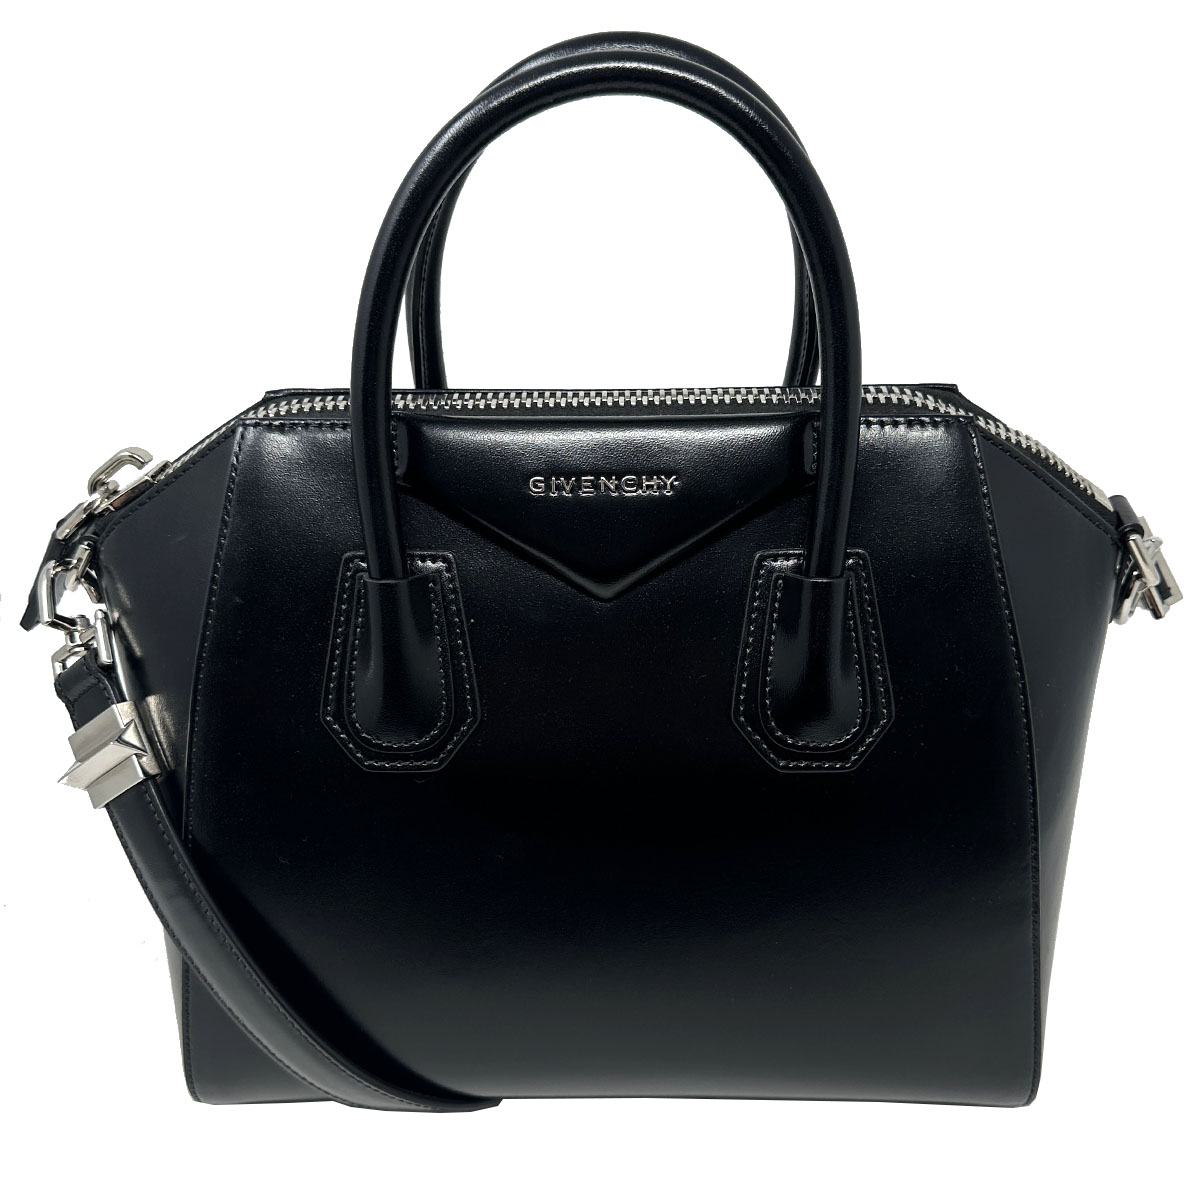 Givenchy Antigona Mini Black Leather Bag